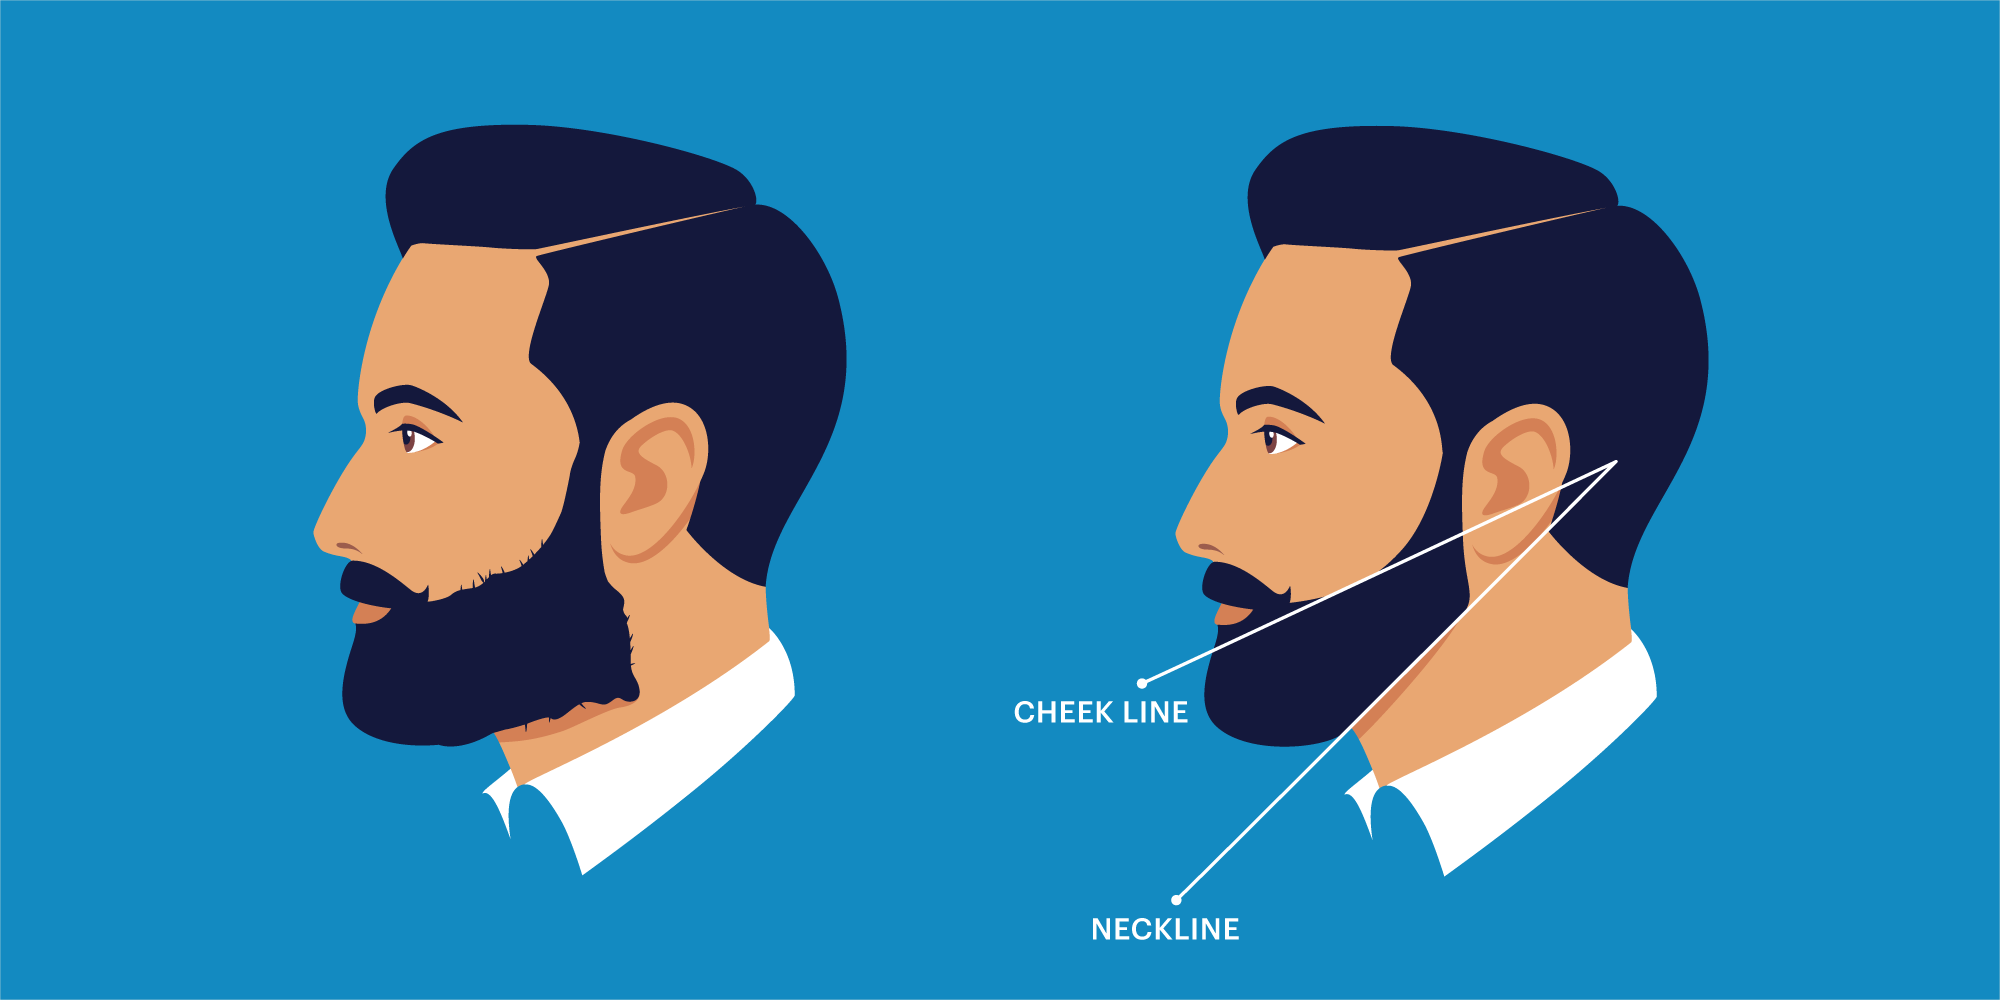 Beard Drawing - How To Draw A Beard Step By Step